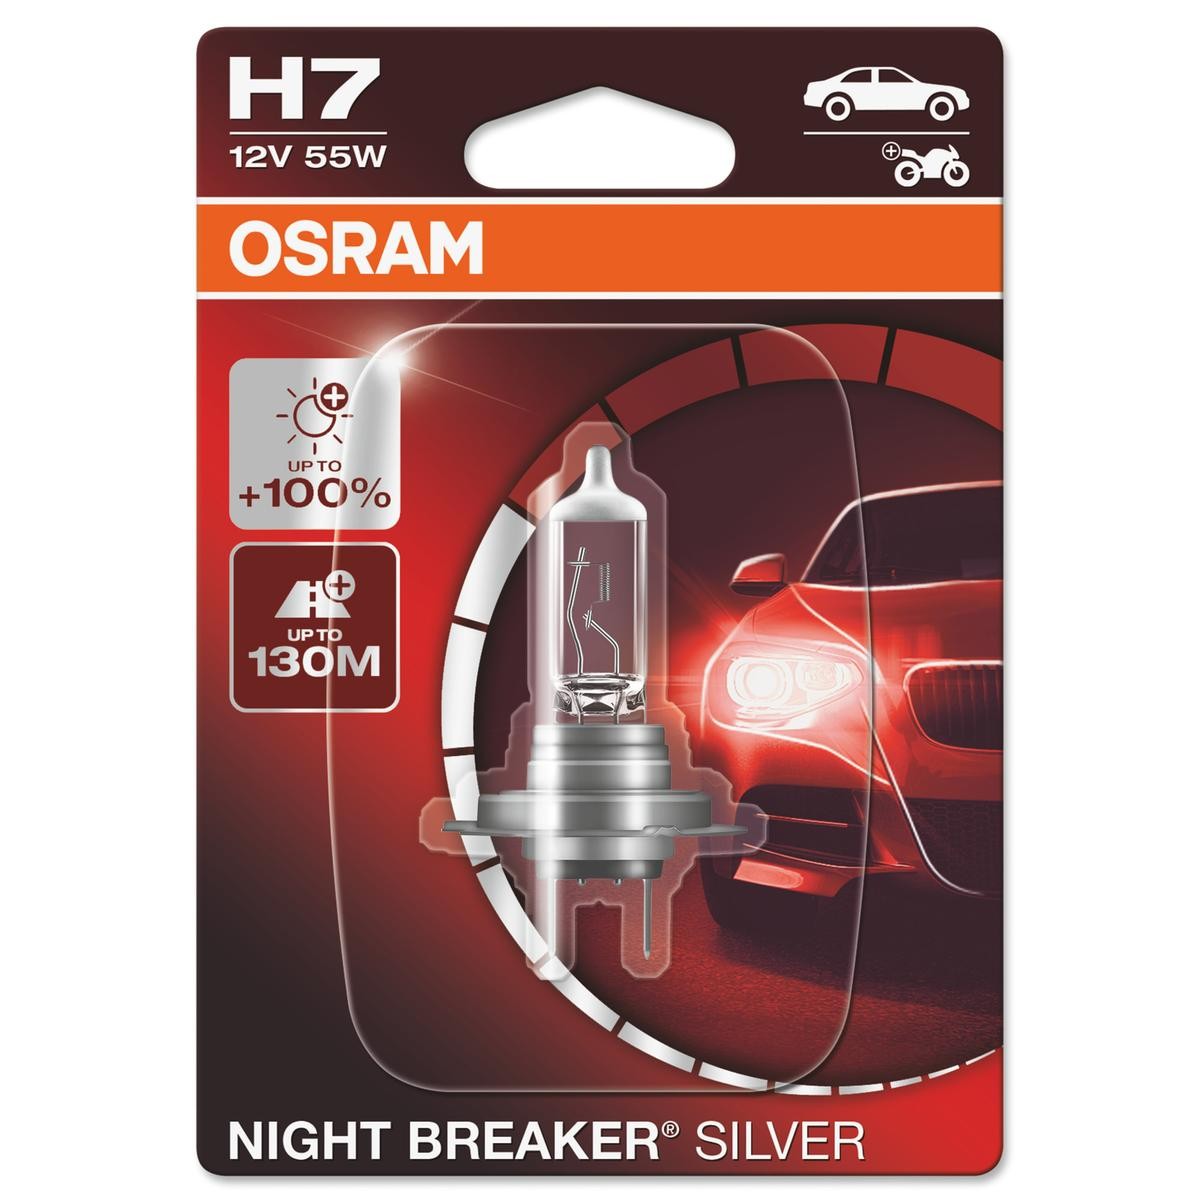 64210NBS-01B OSRAM NIGHT BREAKER SILVER H7 12V 55W PX26d, Halogen